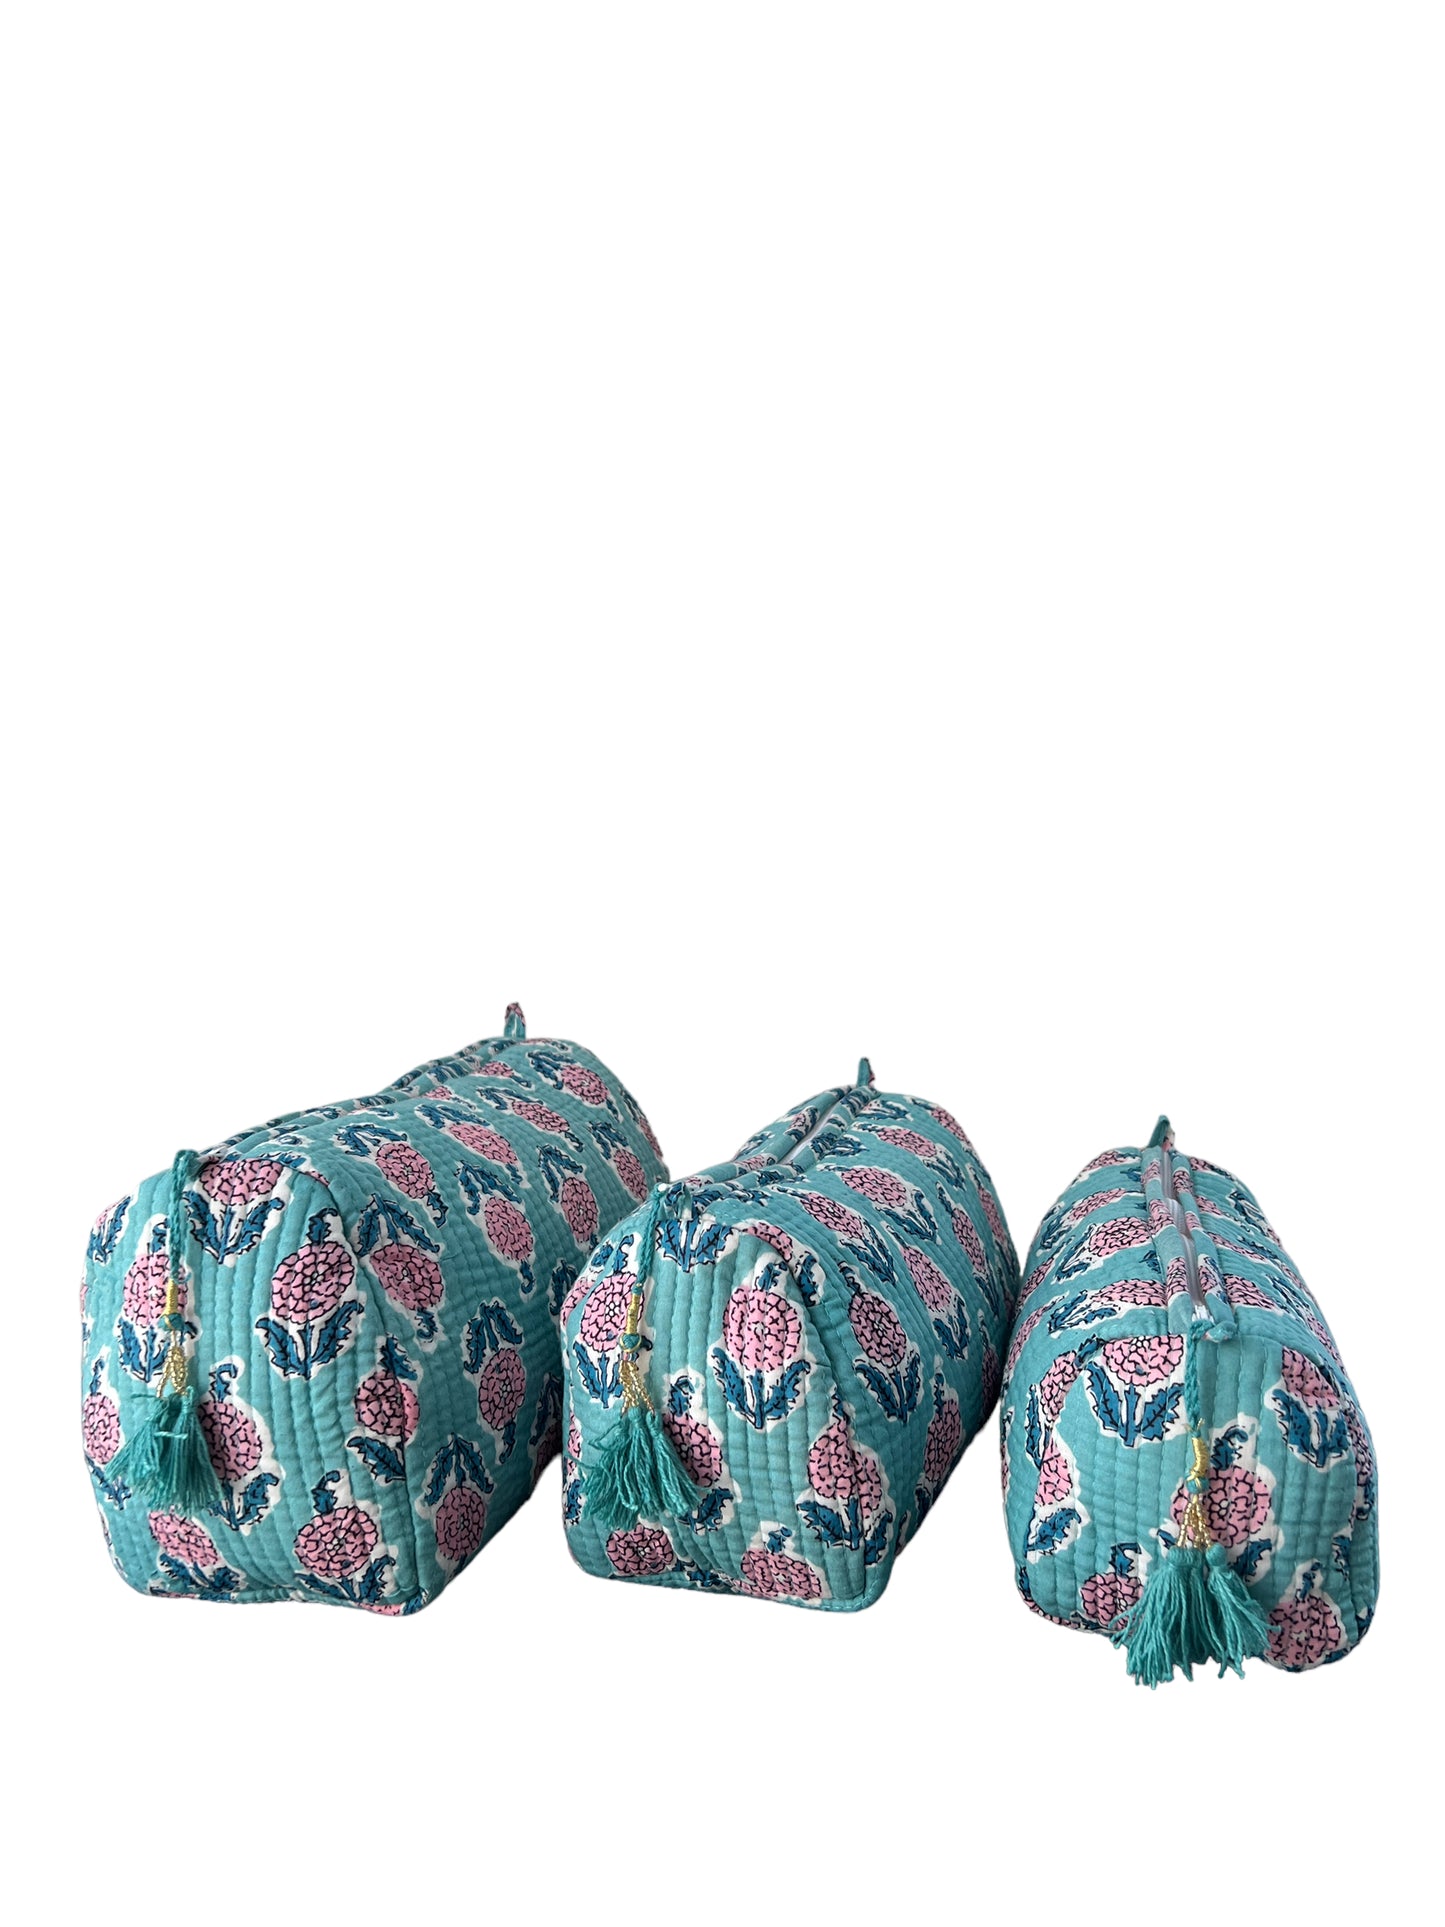 (M084) Make Up Bag Turquoise Mauve Flowers